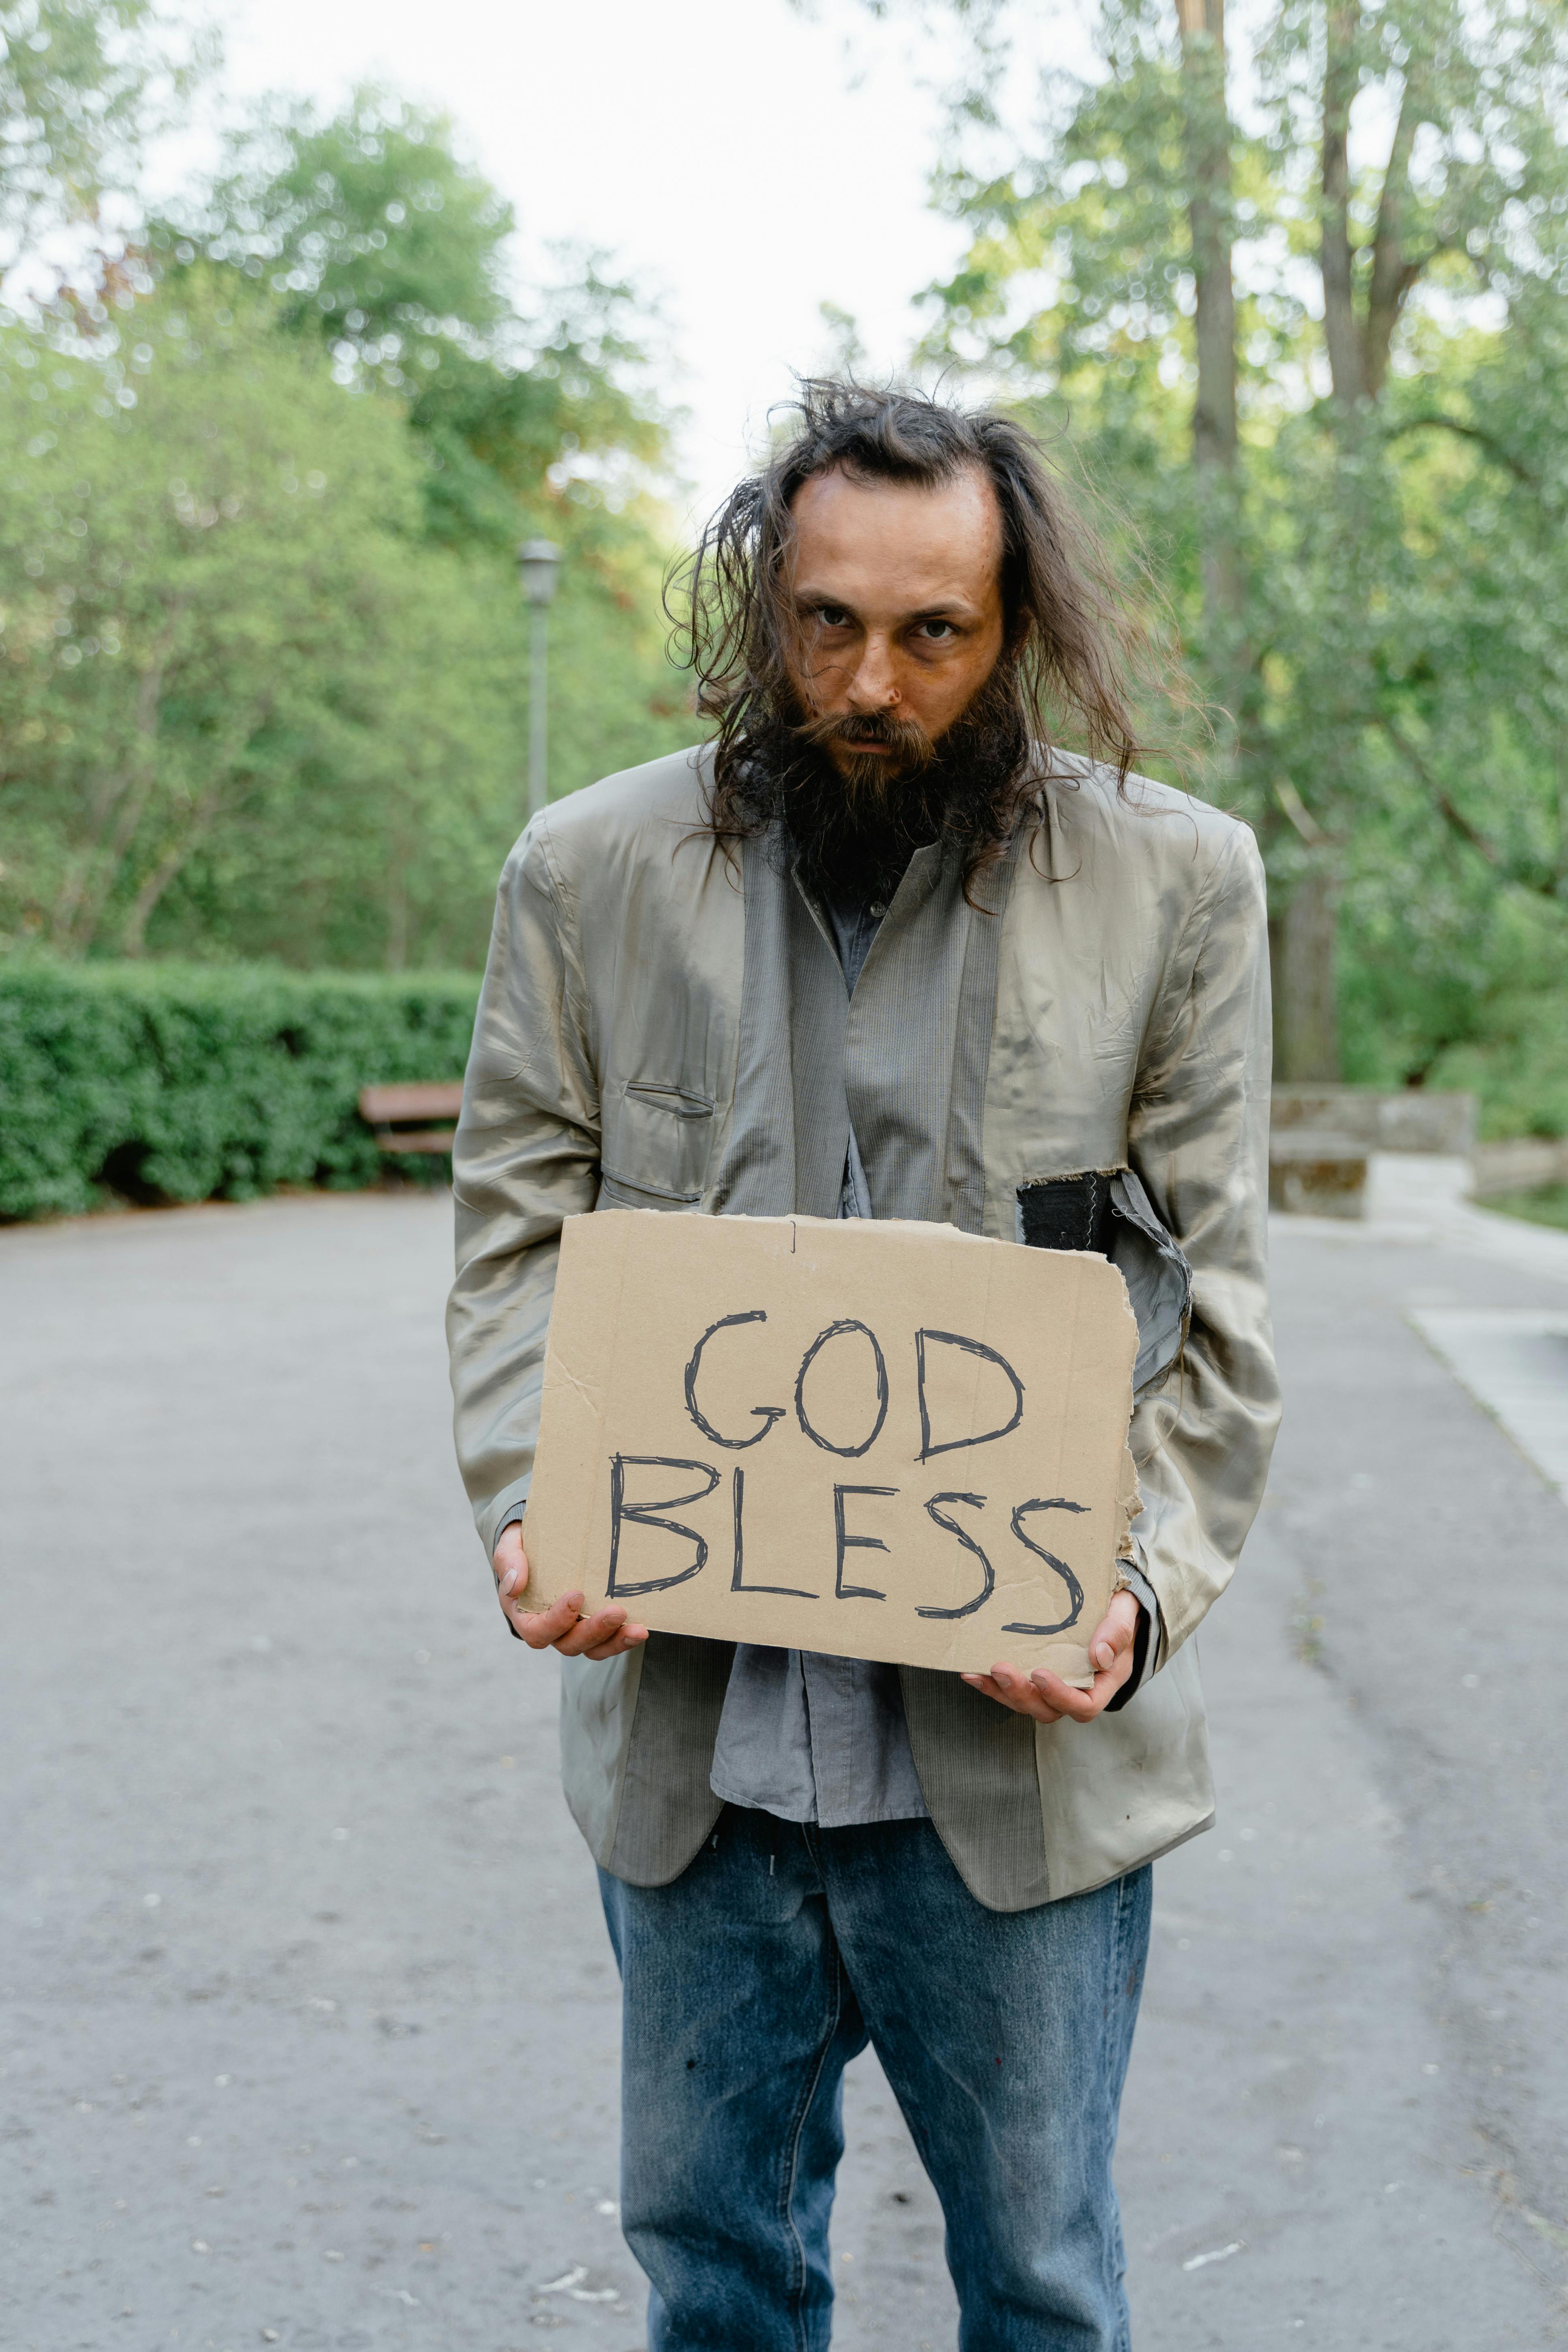 A destitute man holding a sign | Source: Pexels